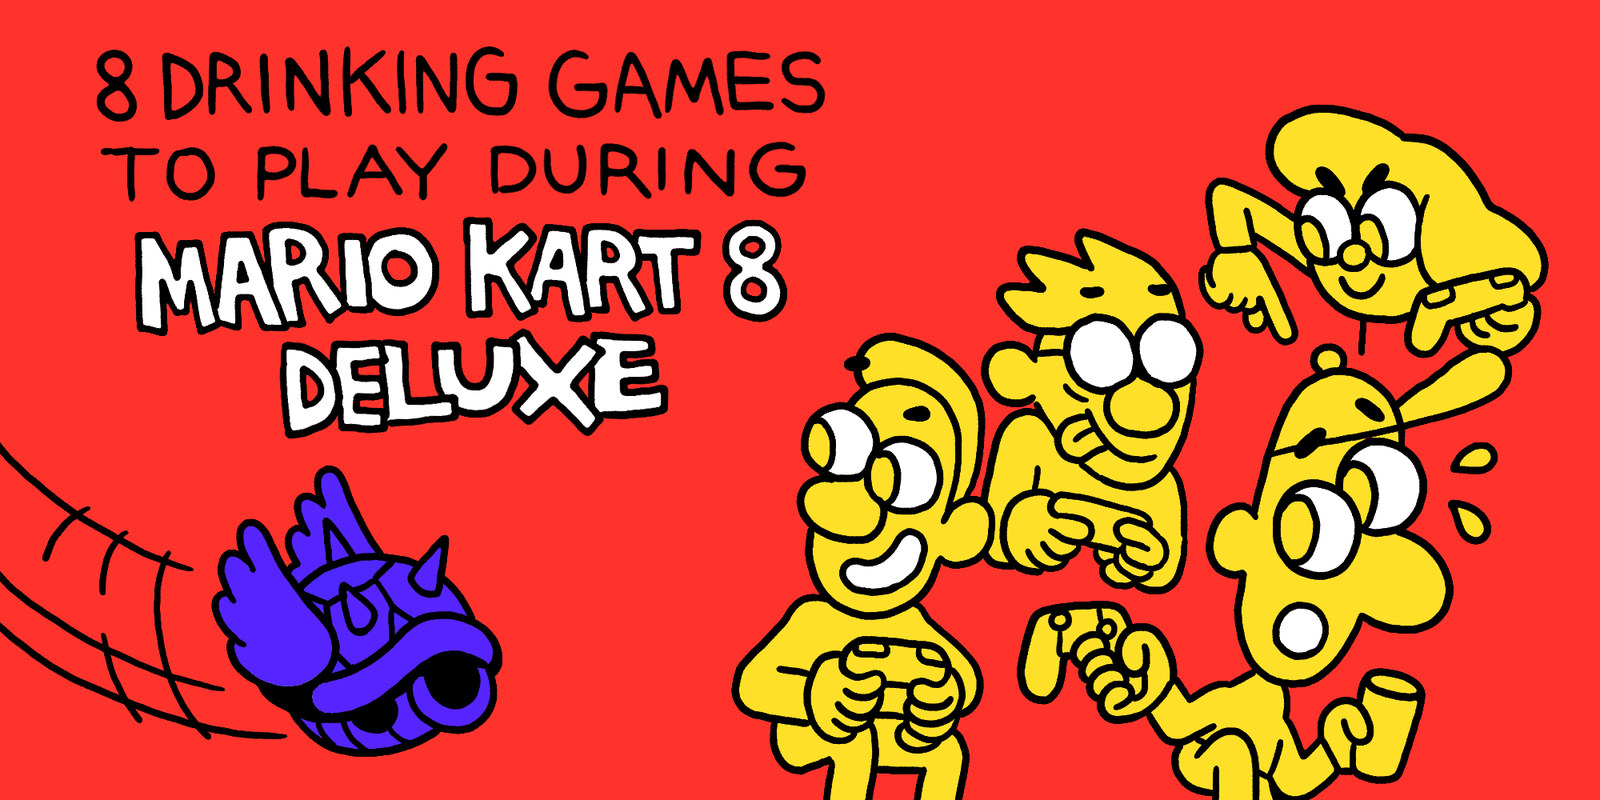 Mario Kart Porn Game - 8 â€œMario Kartâ€ Drinking Games That'll Make â€œMK8 Deluxeâ€ Even More Fun